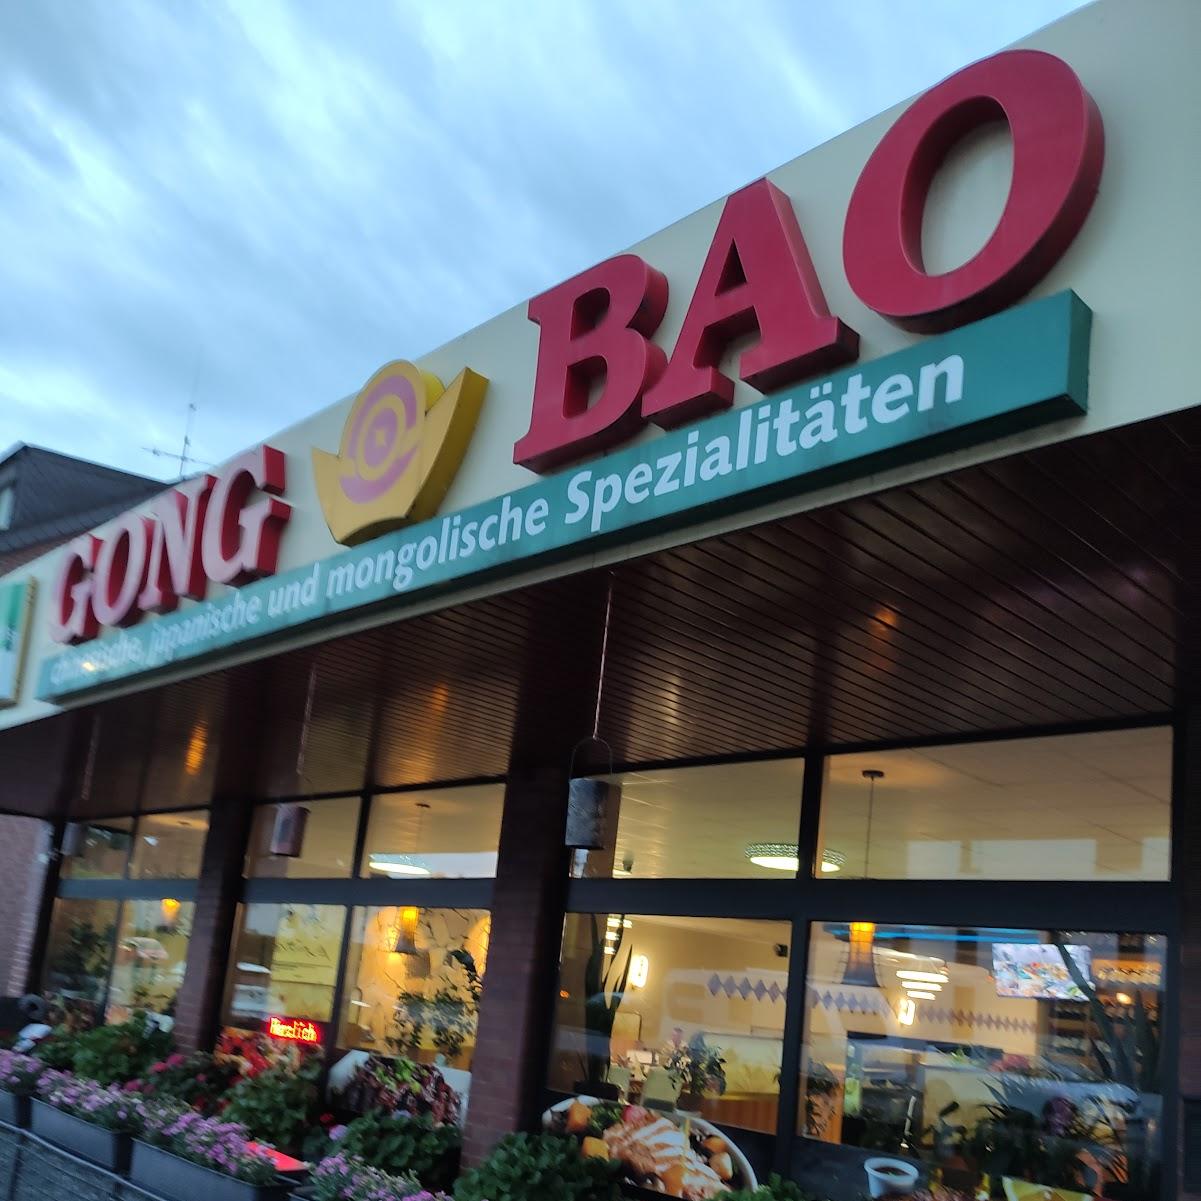 Restaurant "Gong Bao" in Dortmund